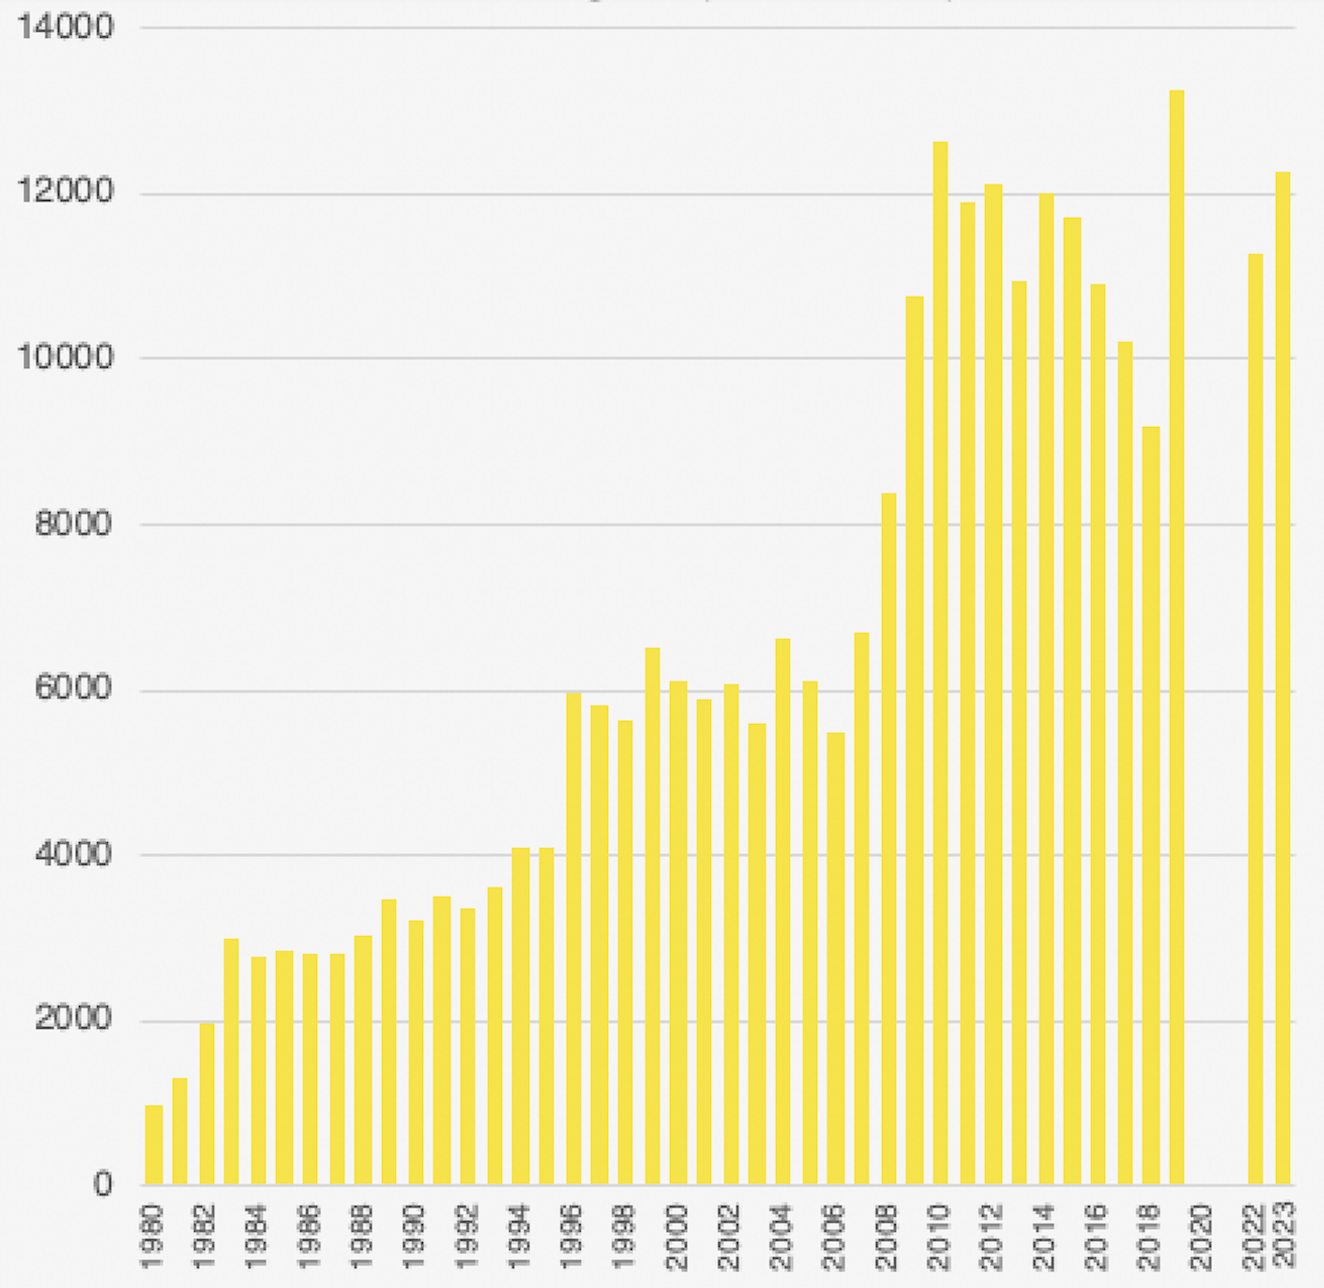 Maraton statistikk paameldingstall 1980-2023.png